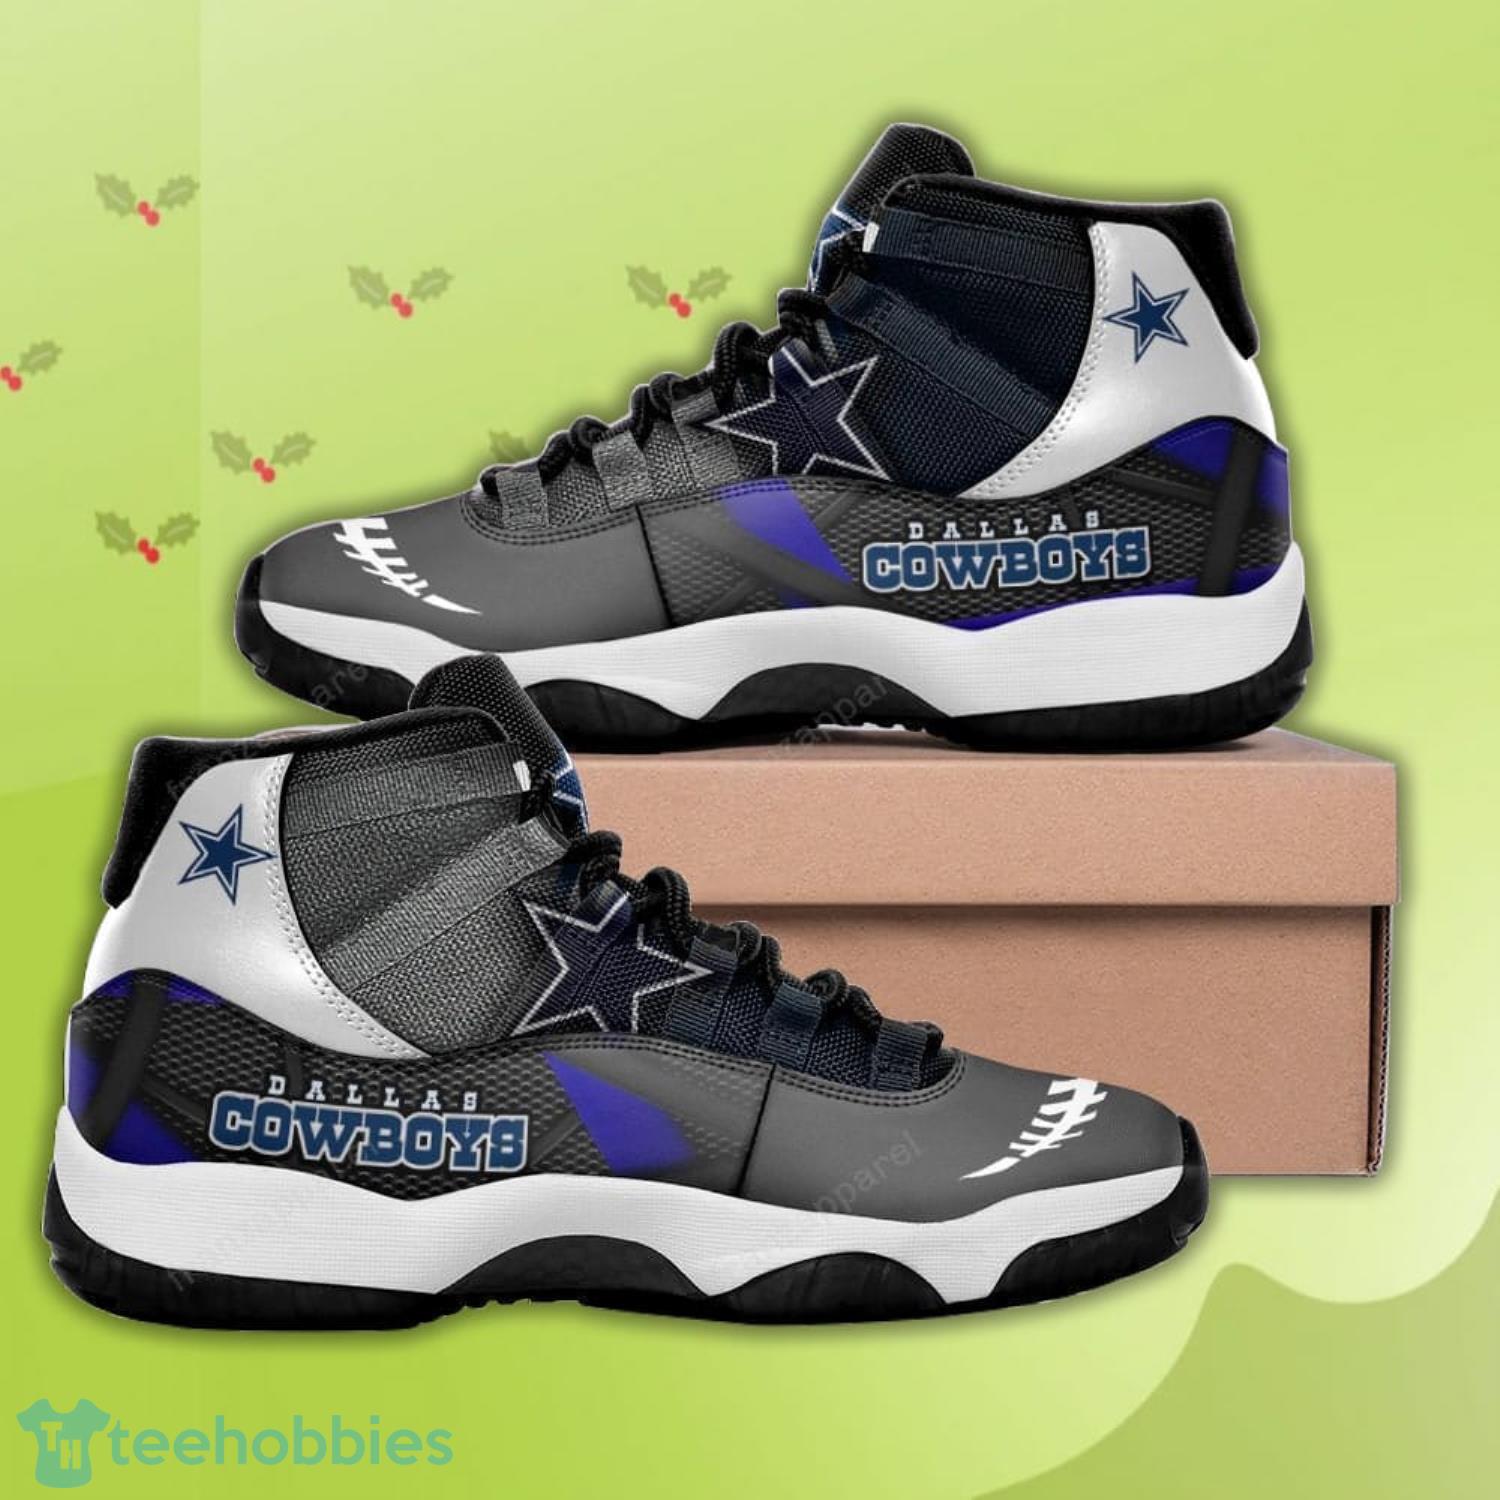 DaIIas Cowboys Team Air Jordan 11 Shoes For Fans Product Photo 1